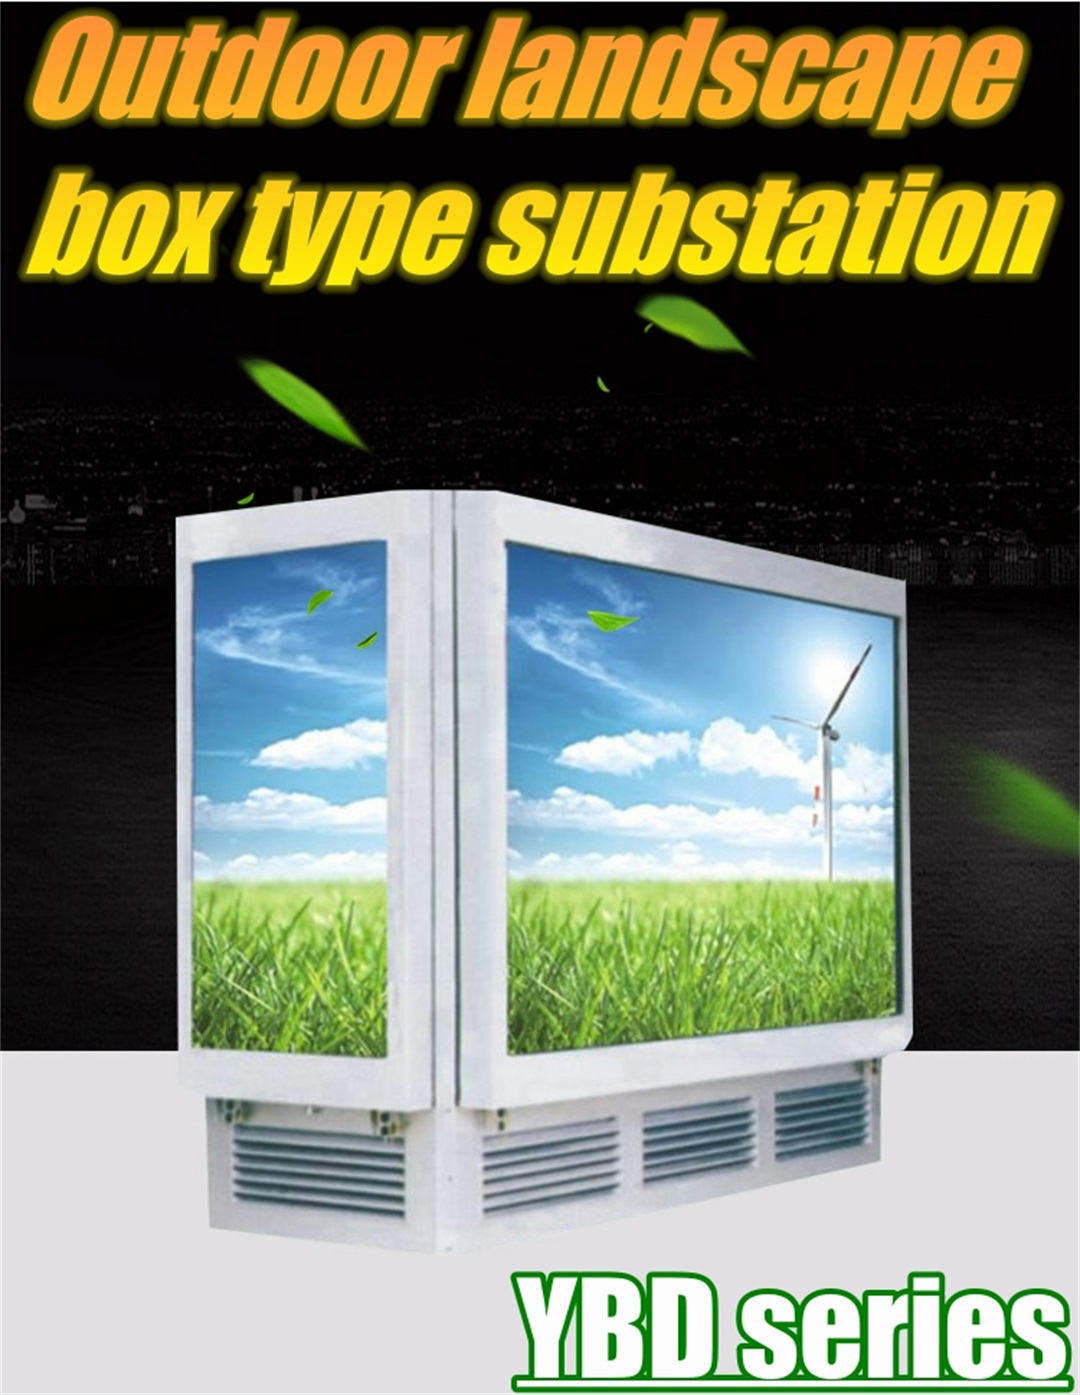 Pre installed underground box type substation